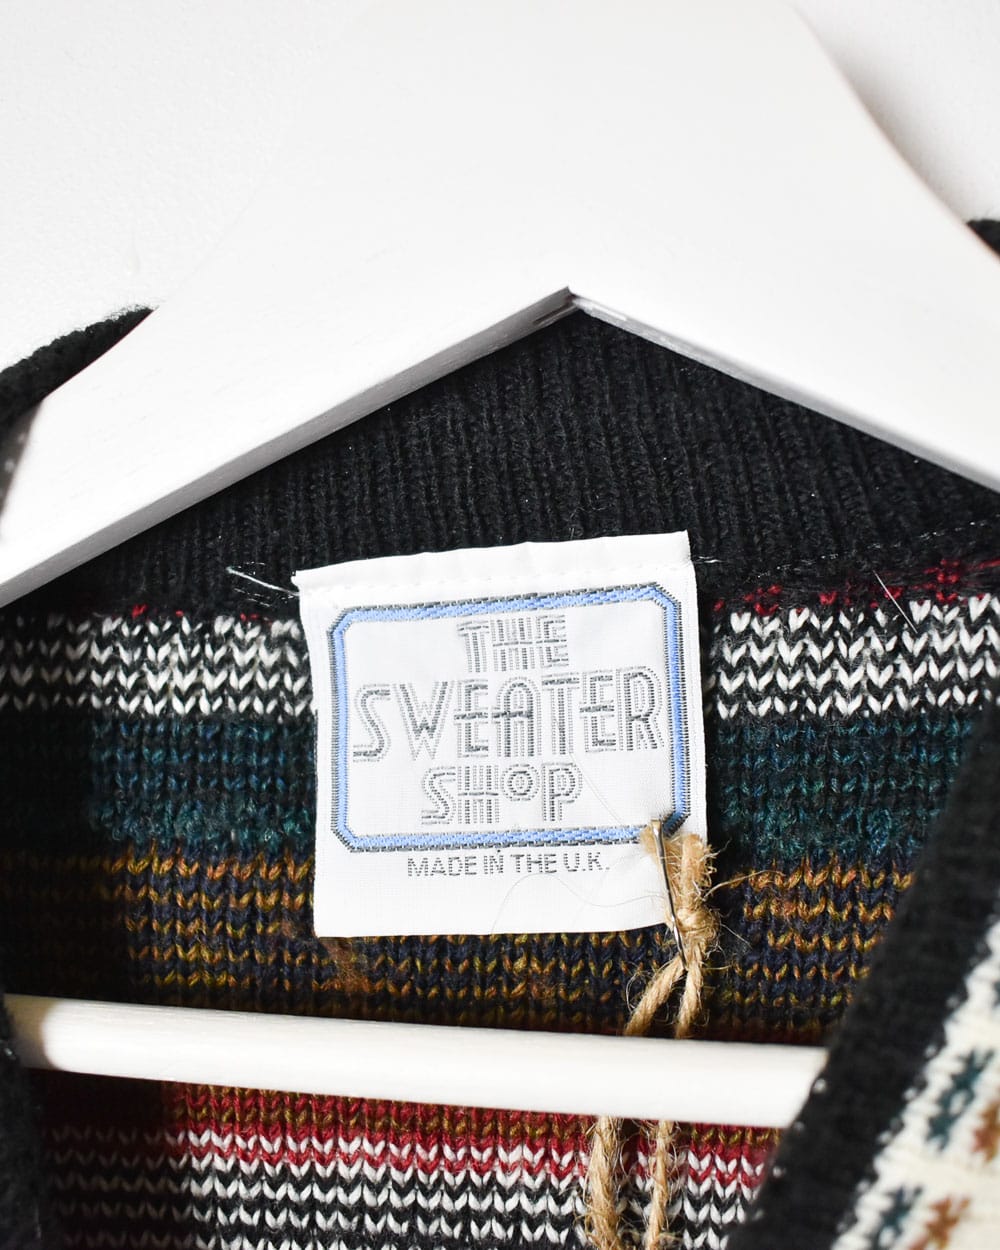 Multi The Sweater Shop Knitted Sweatshirt - Medium